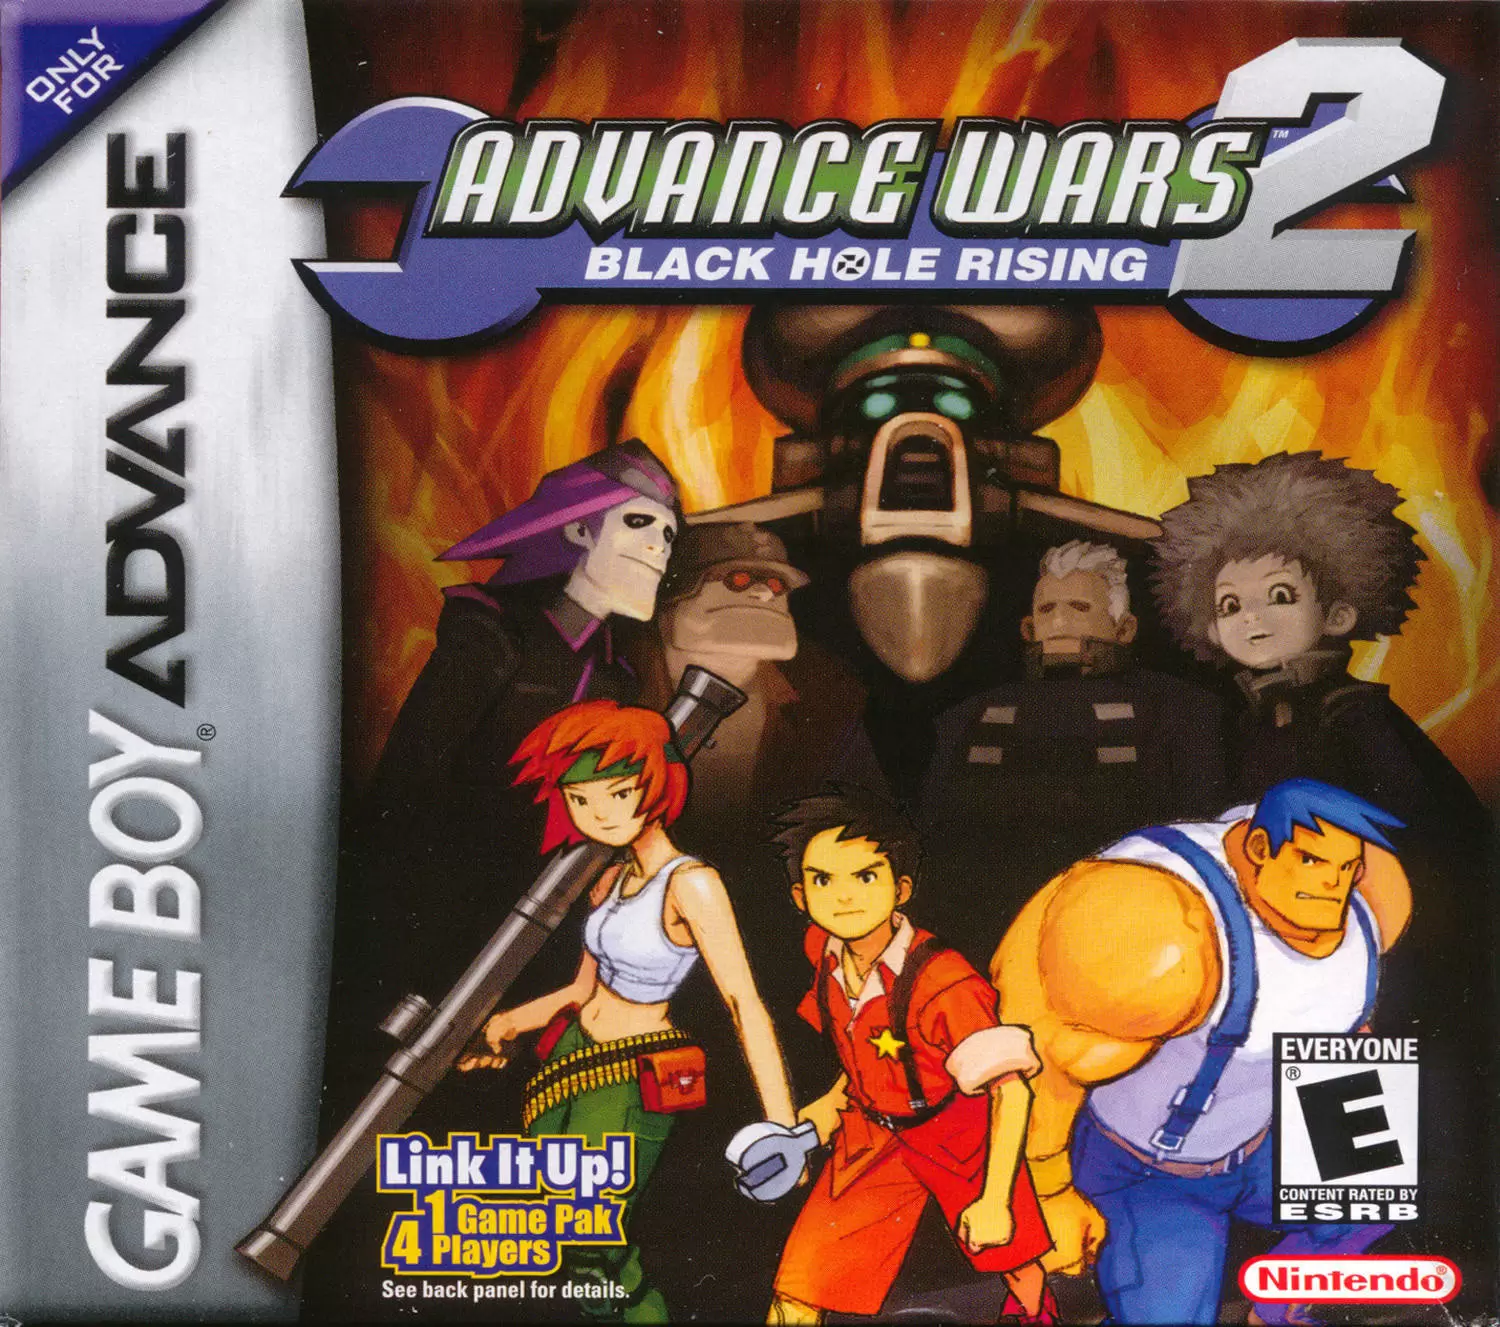 Game Boy Advance Games - Advance Wars 2: Black Hole Rising